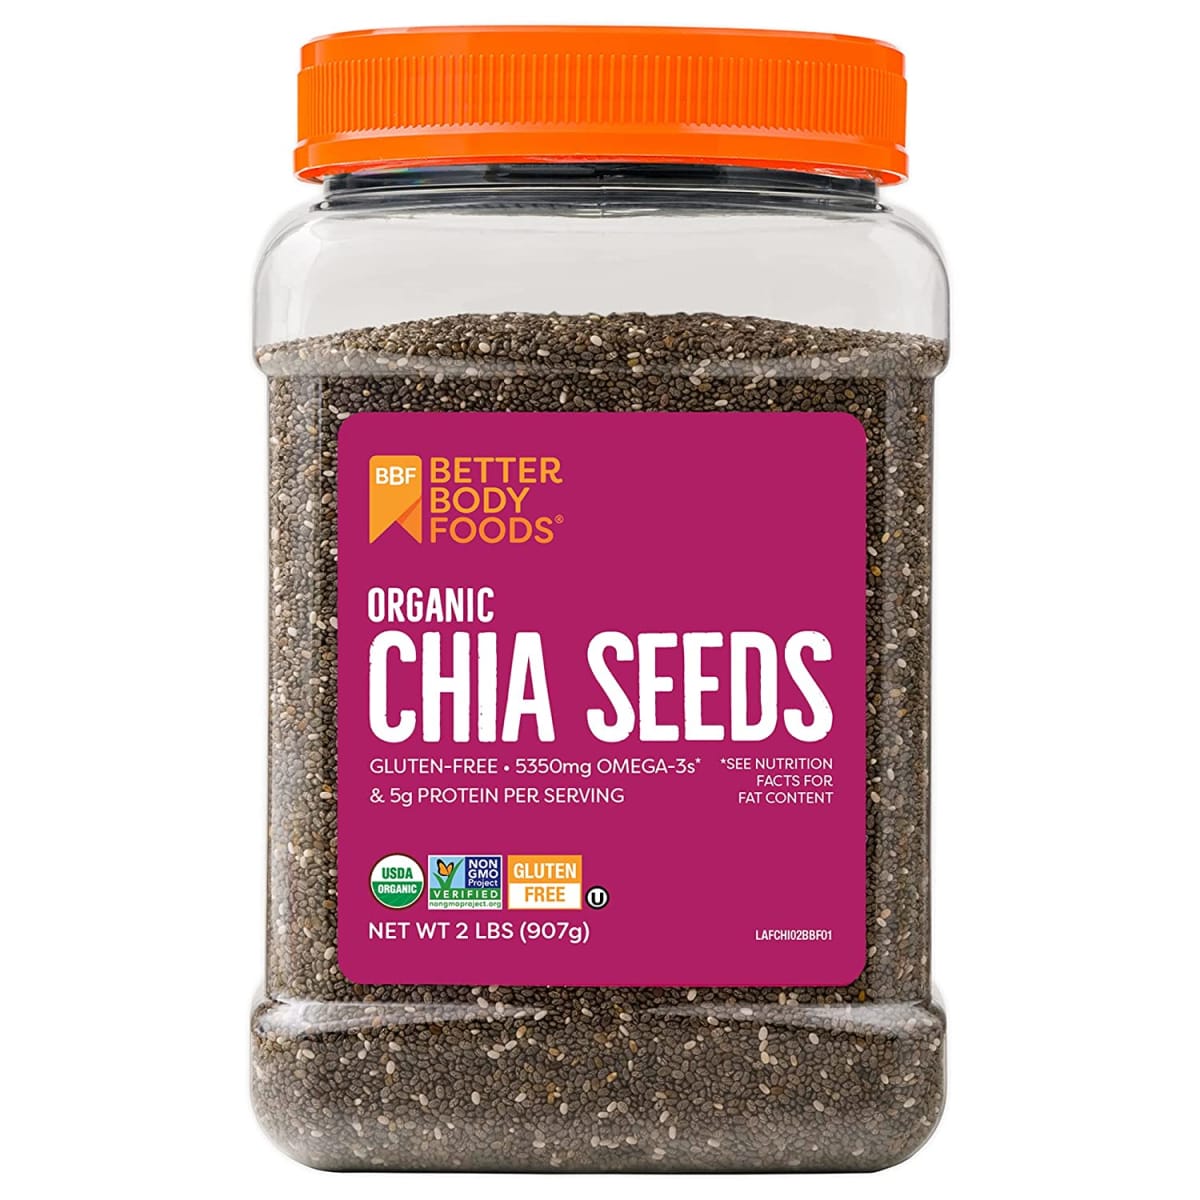 Organic Chia Seeds with Omega-3, Non-GMO, Gluten Free, Keto Diet Friendly